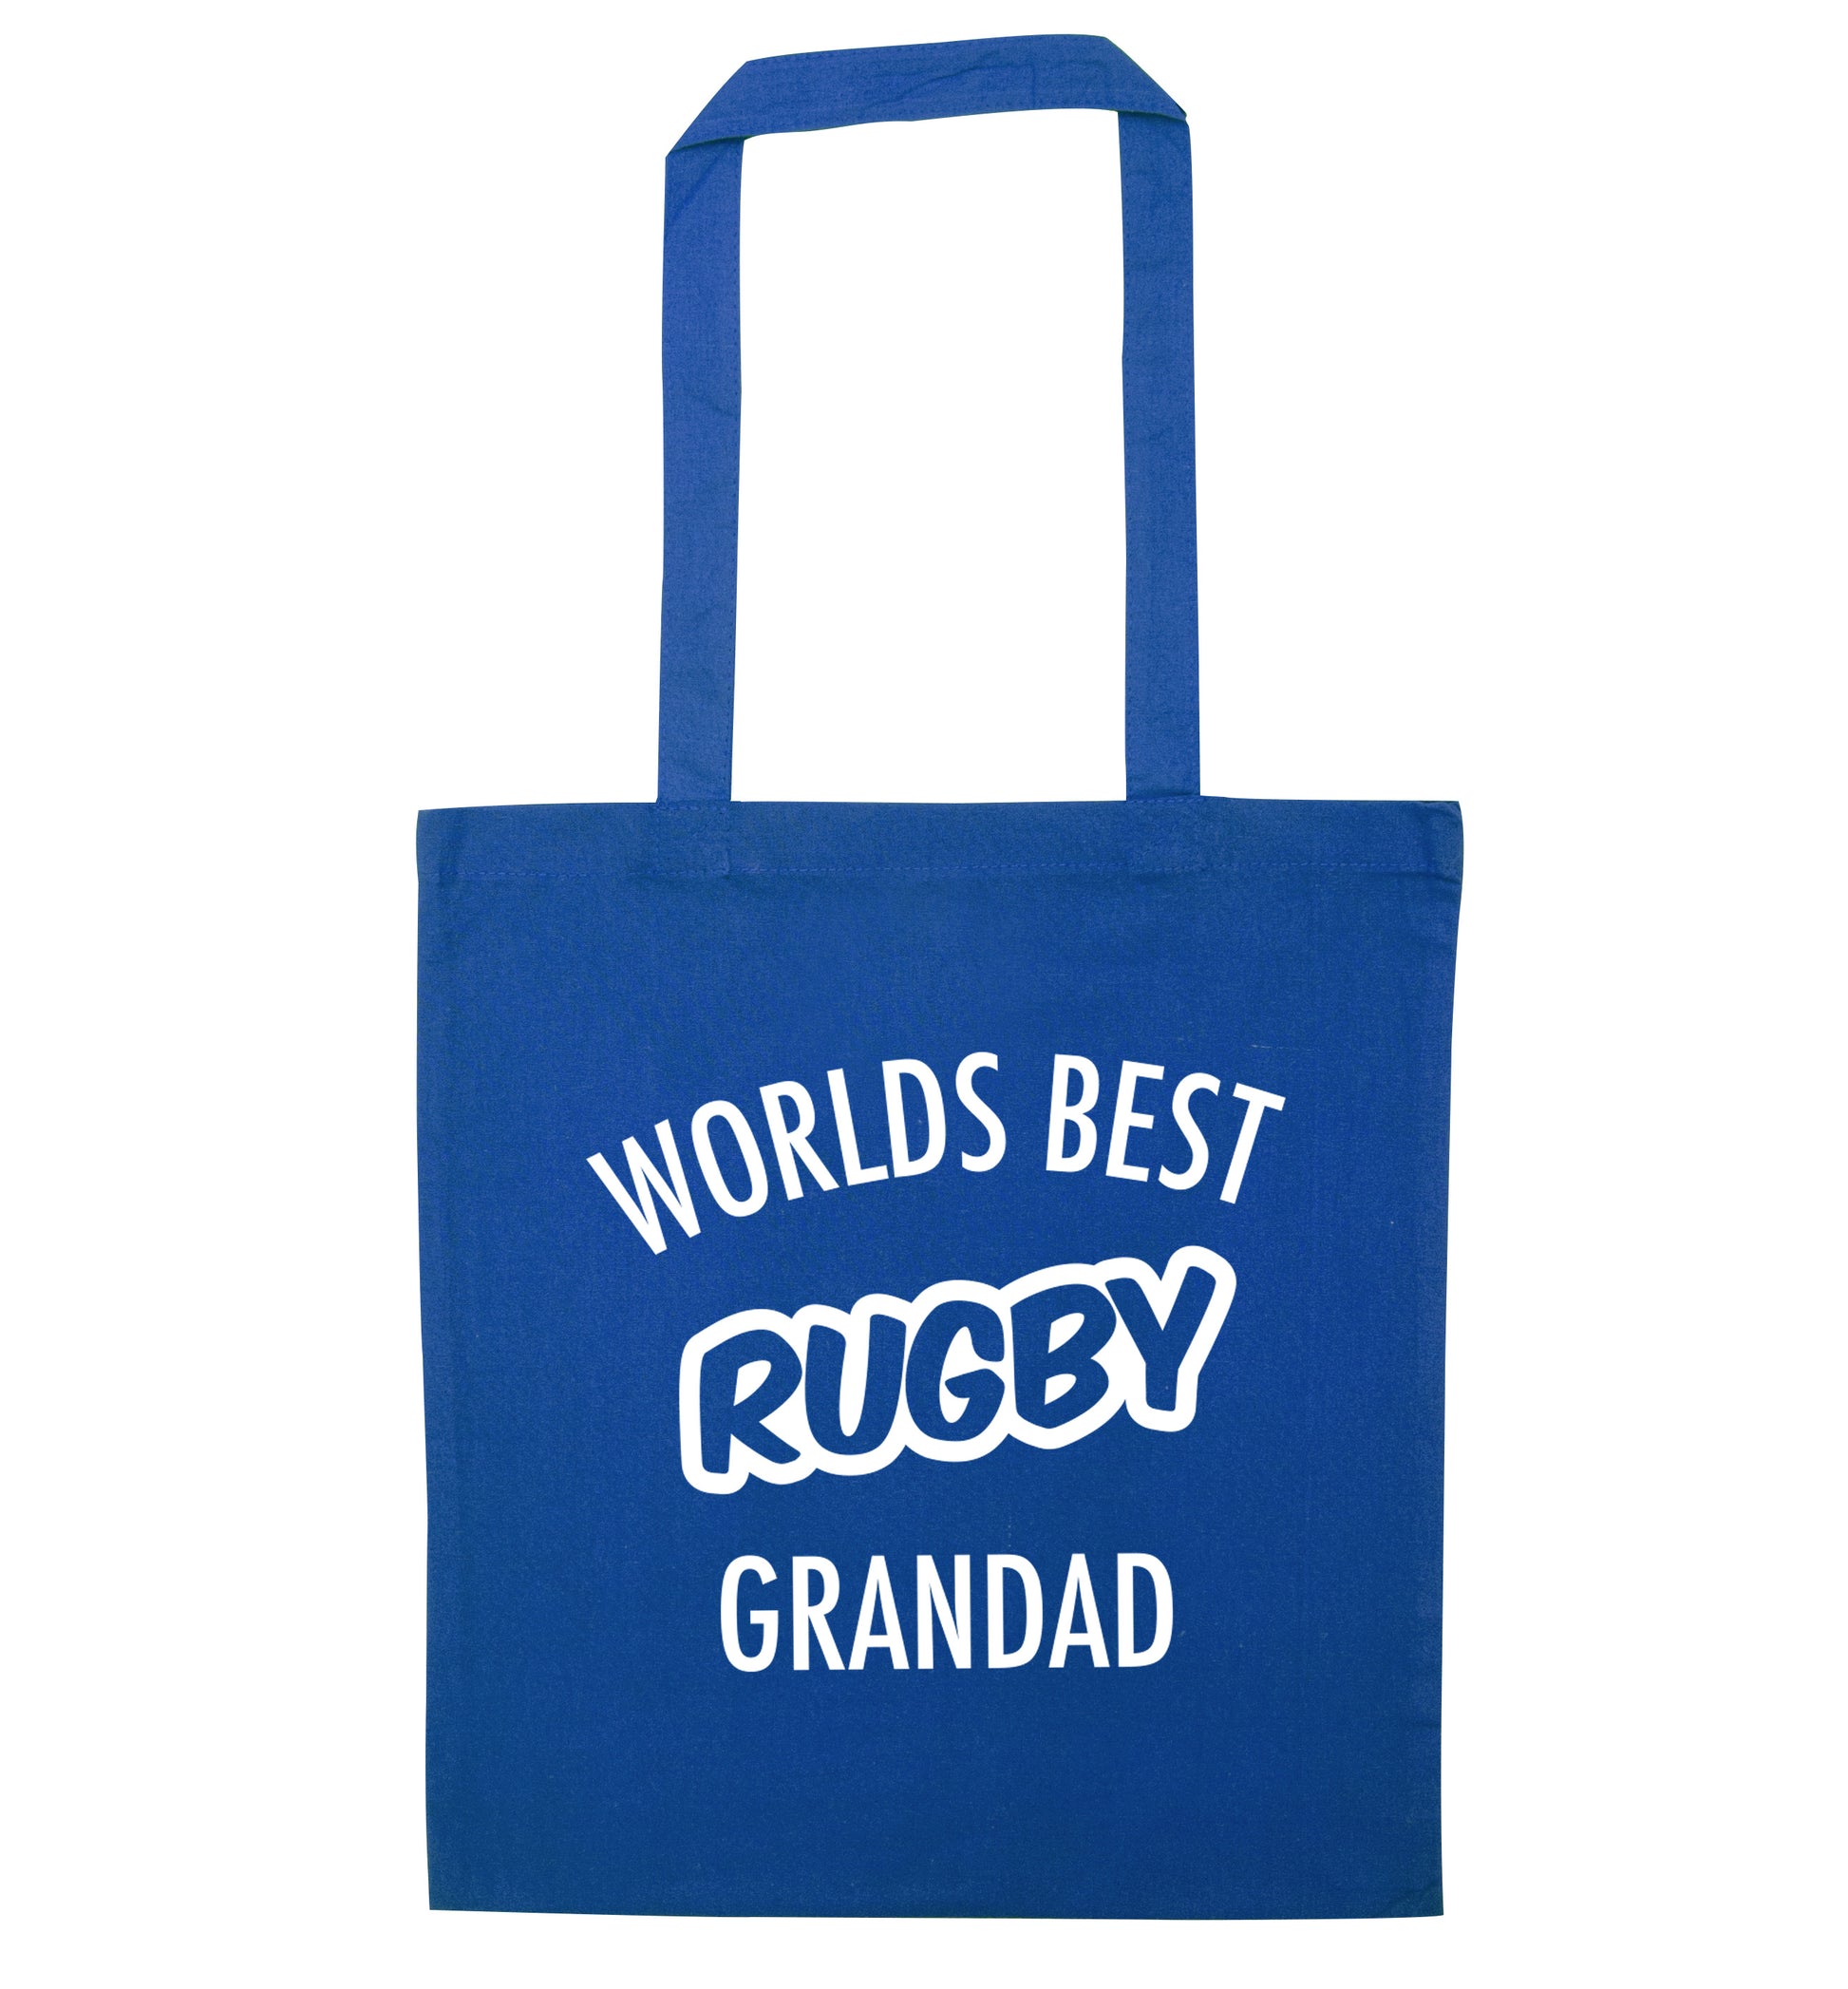 Worlds best rugby grandad blue tote bag